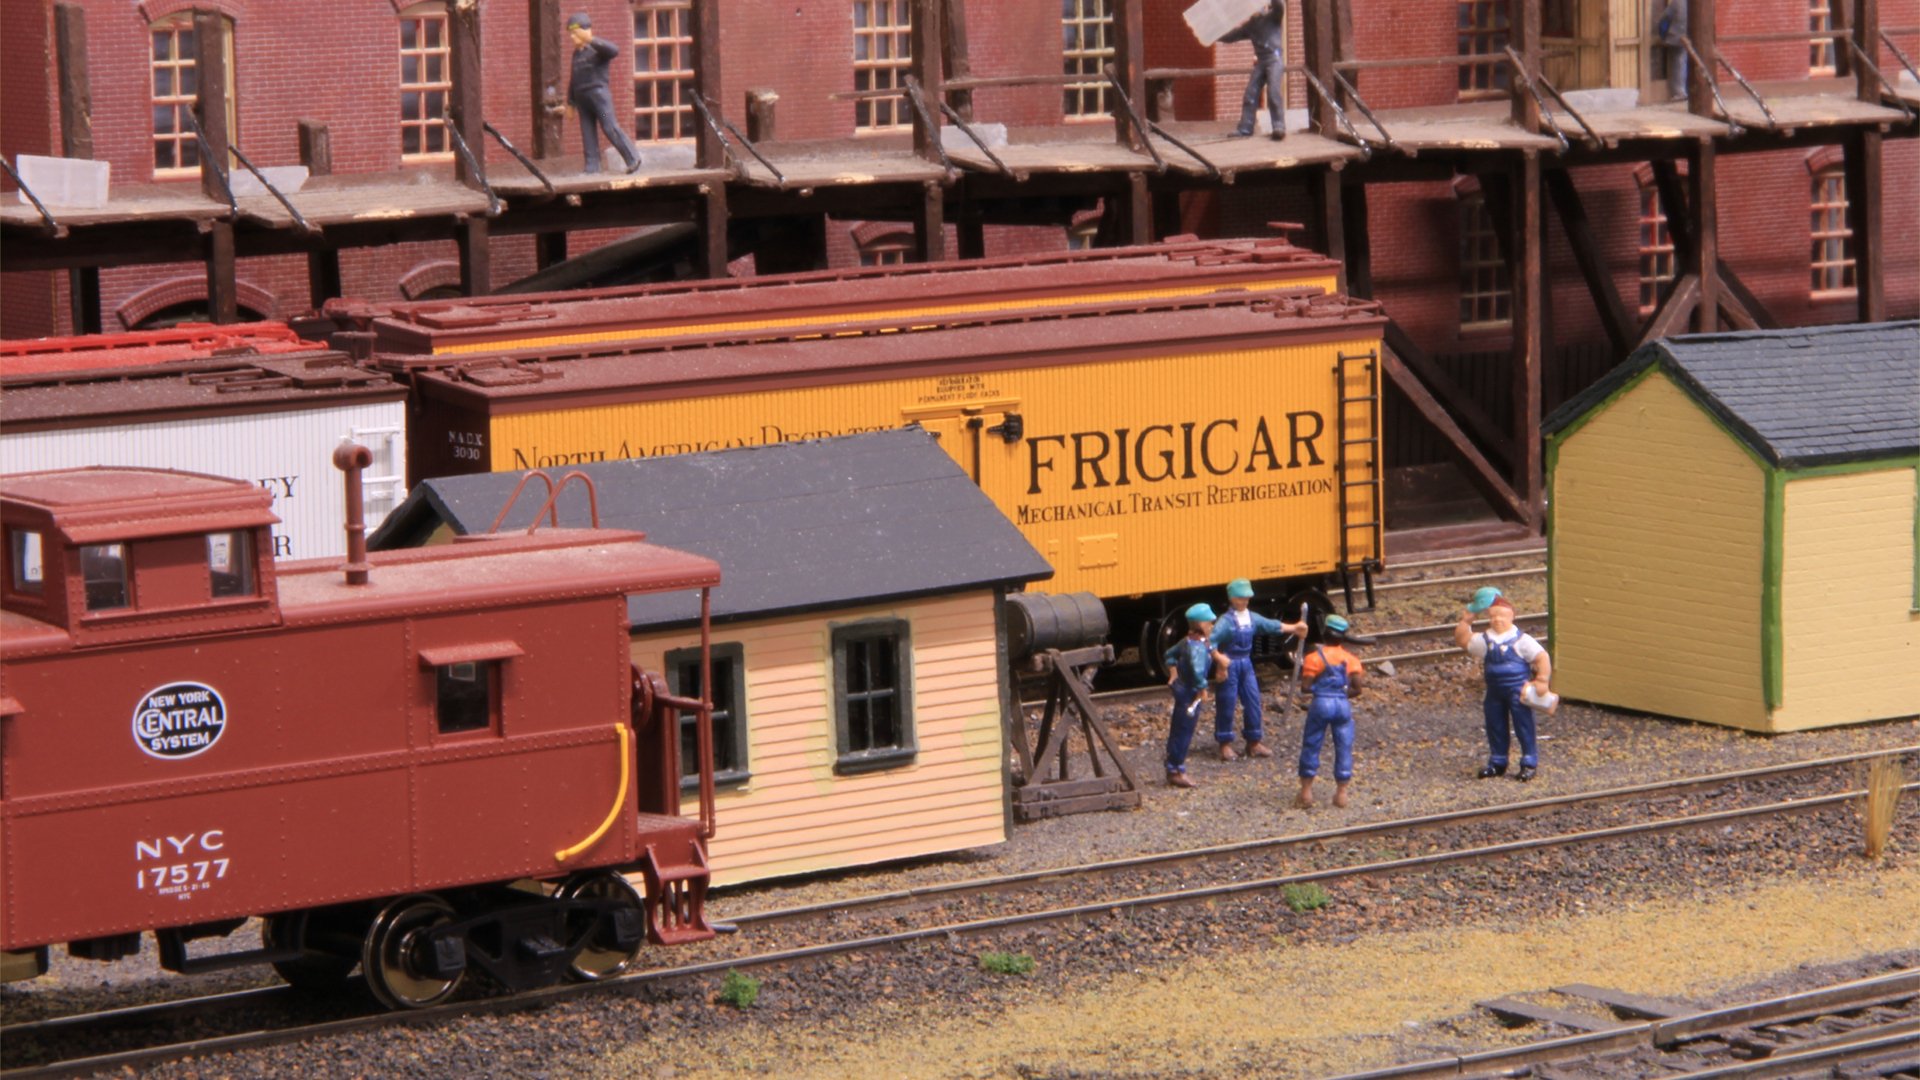 The Model Railway Club Layout